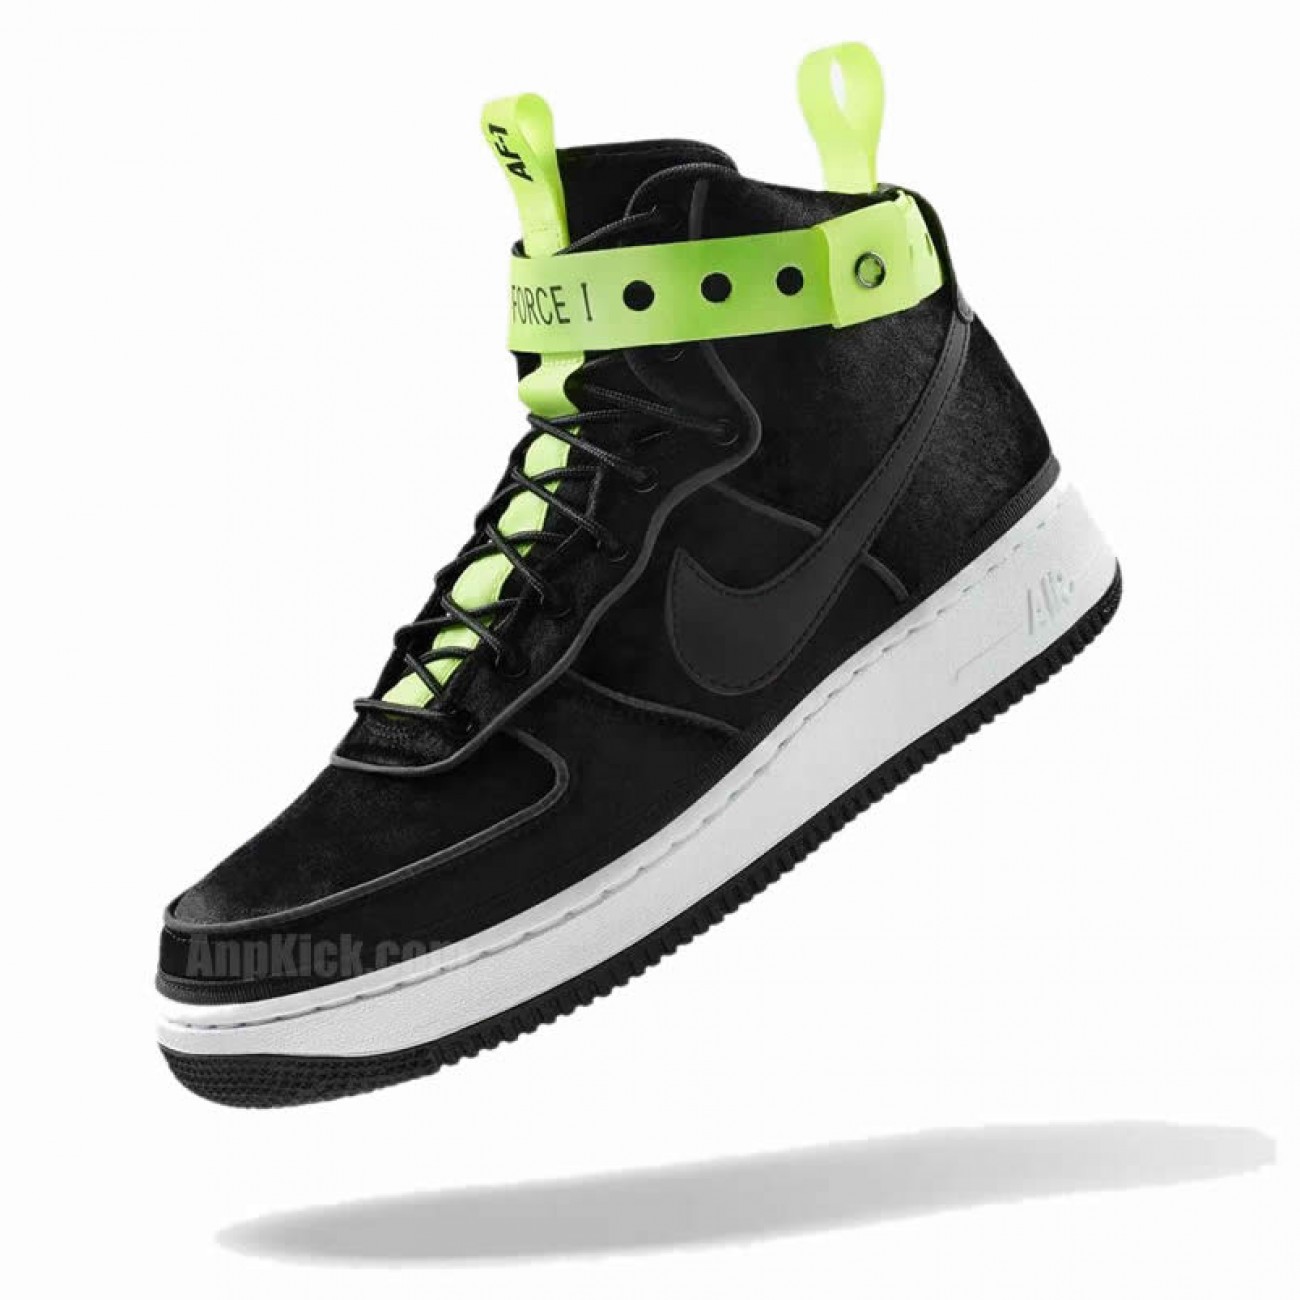 Magic Stick x Nike Air Force 1 High VIP "Black Velour" Sneakers 573967-003